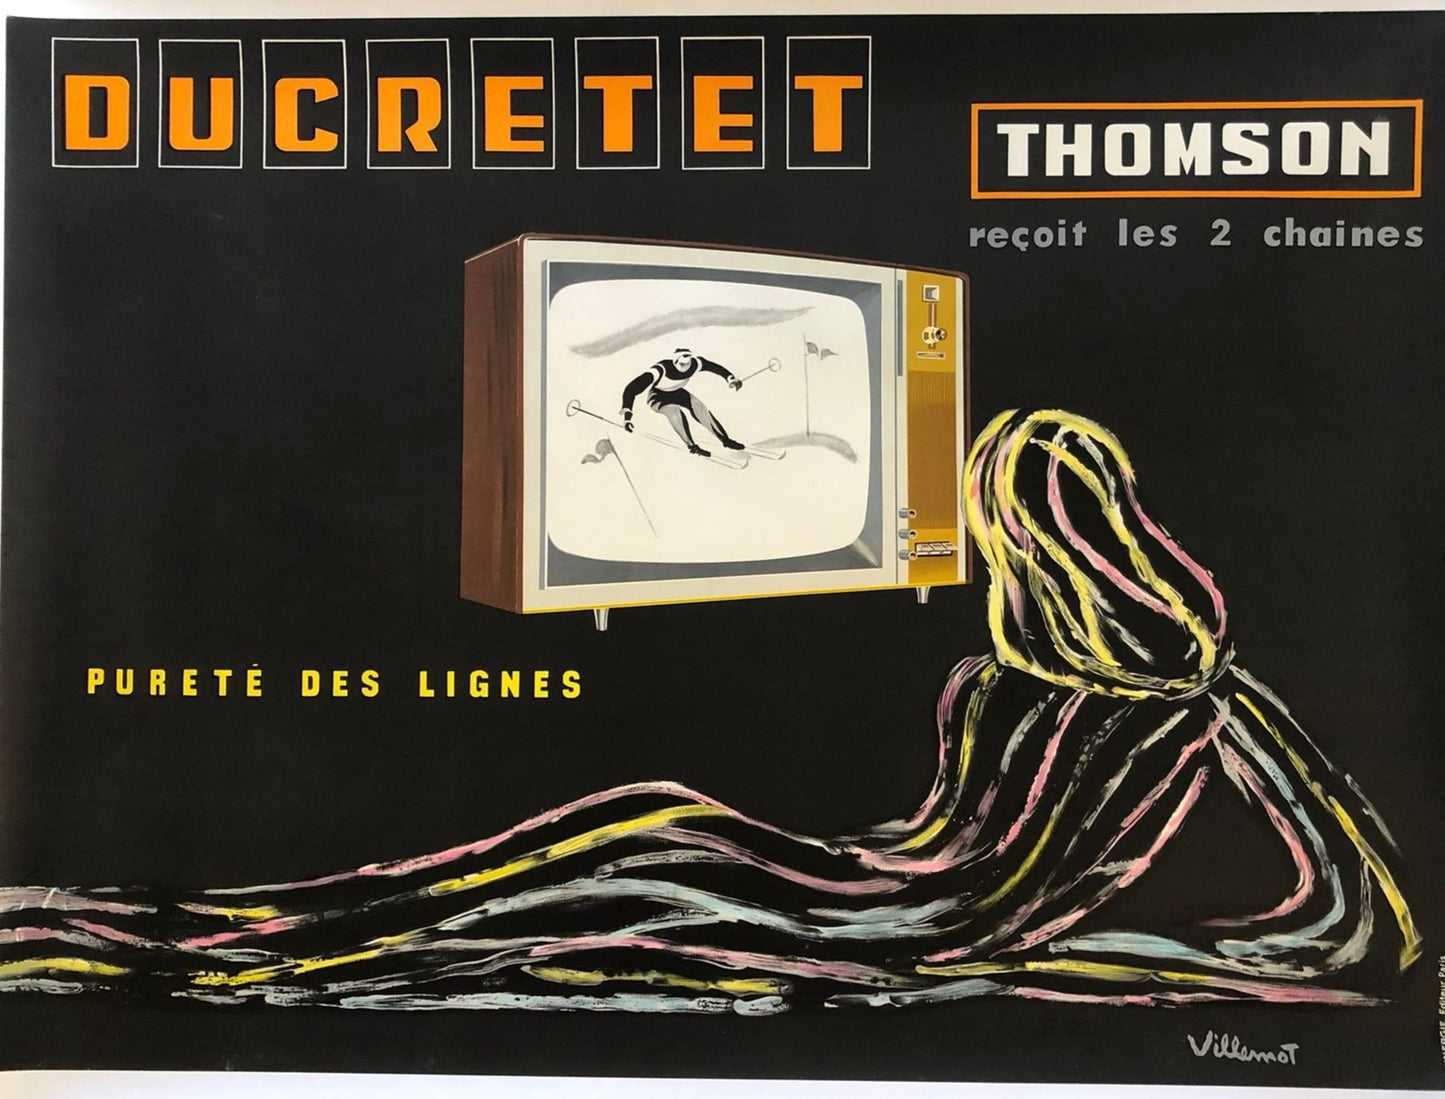 Ducretet Thomson by Villemot